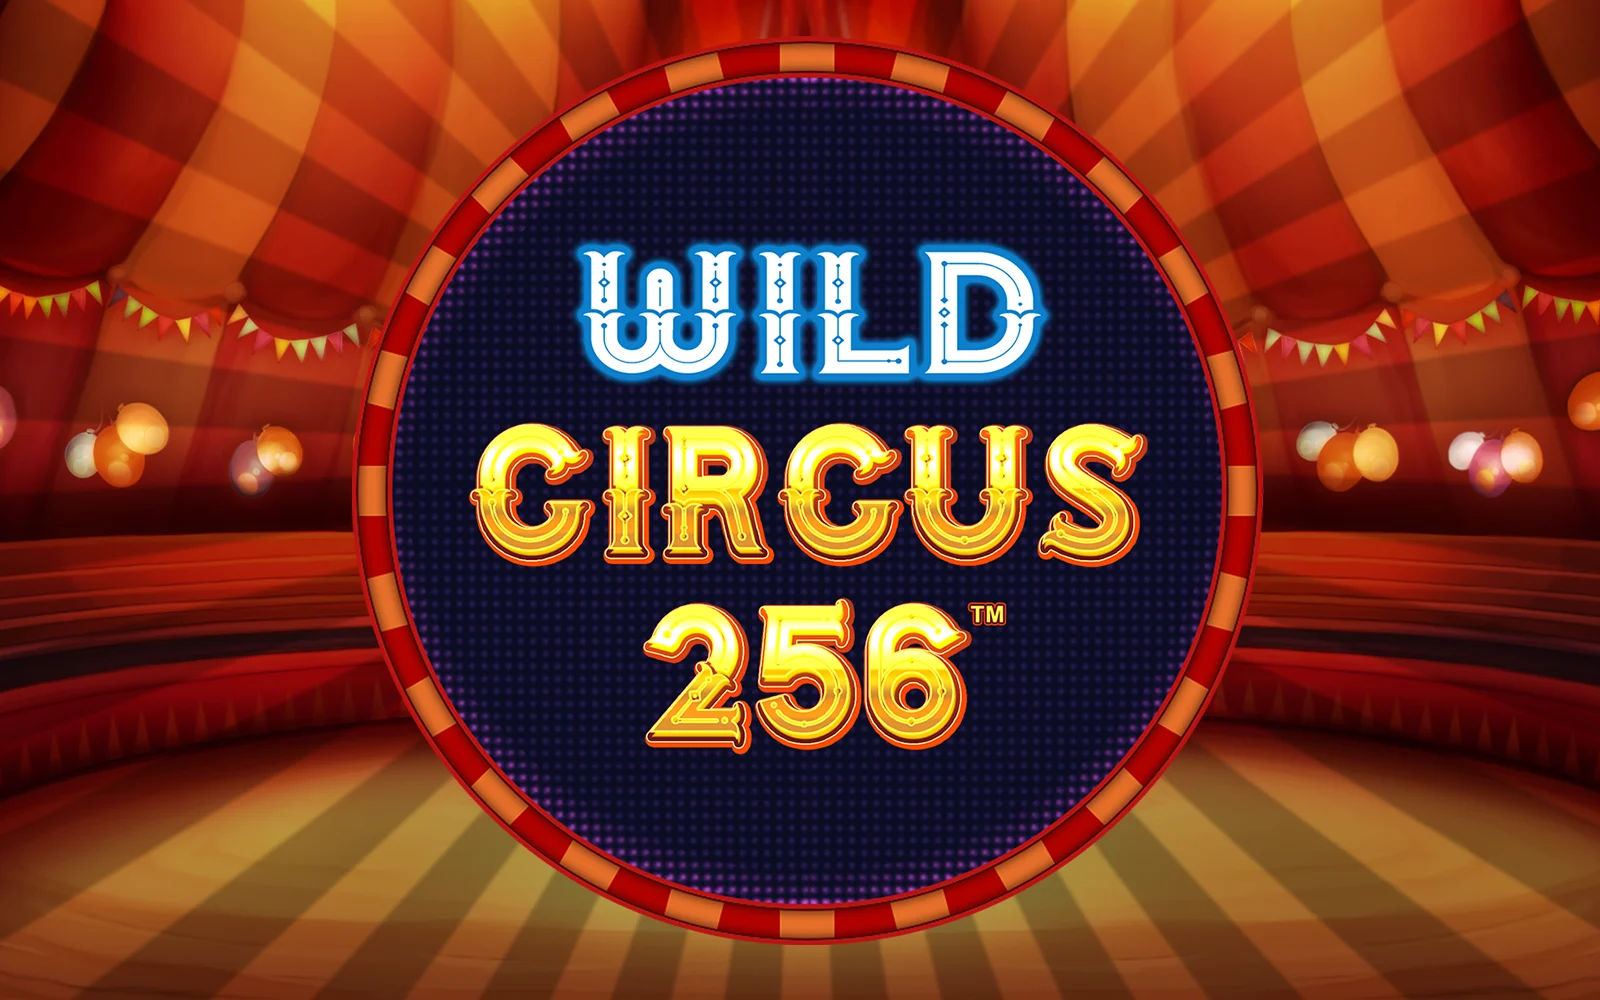 Joacă Wild Circus 256 în cazinoul online Starcasino.be